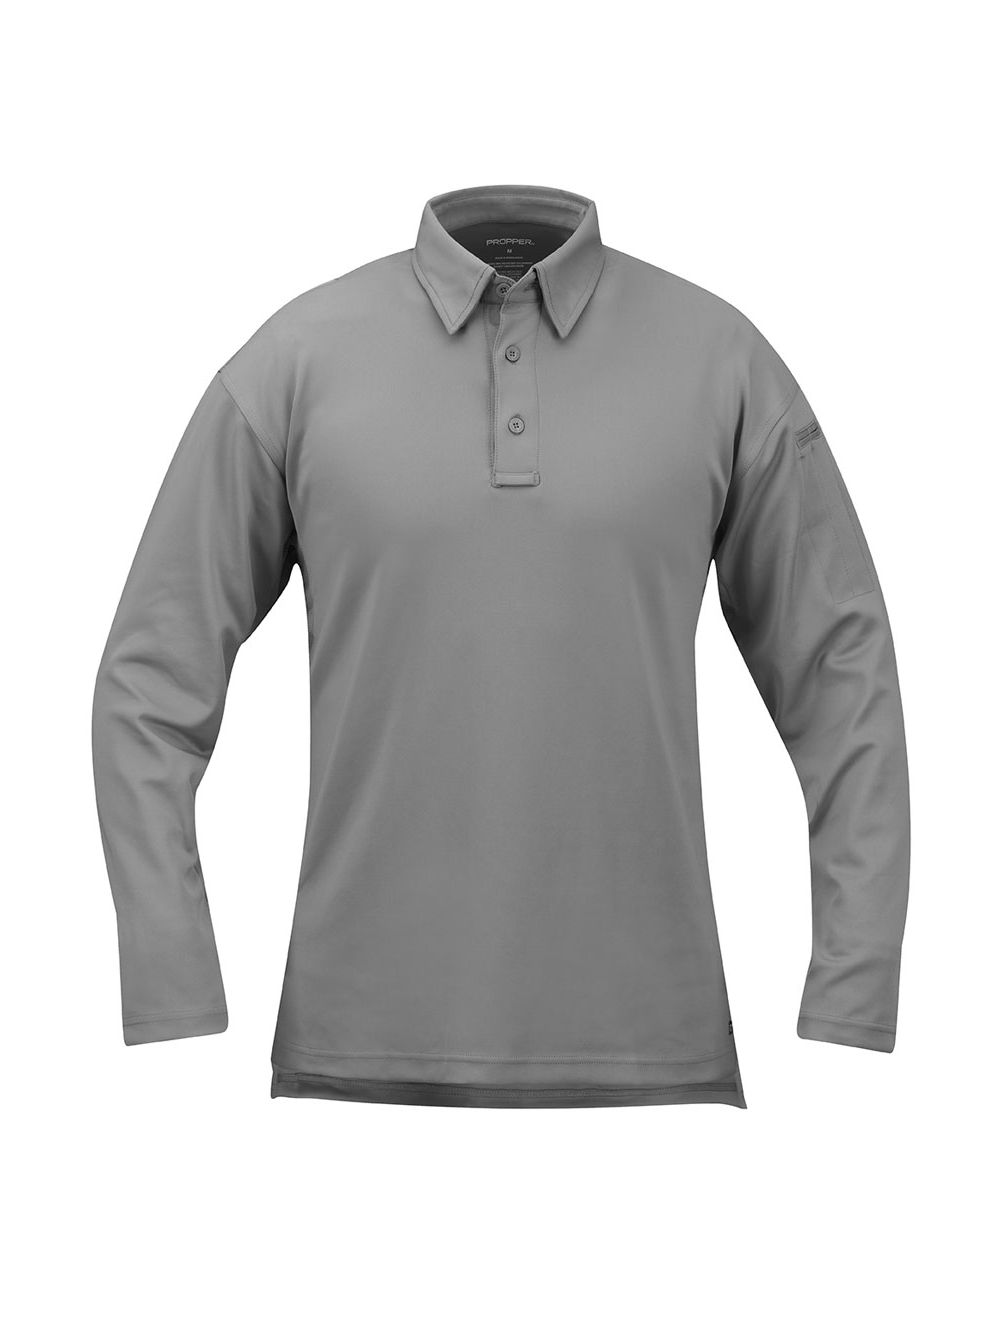 Propper F5315-72 Long Sleeve I.C.E. Performance Polo Shirt